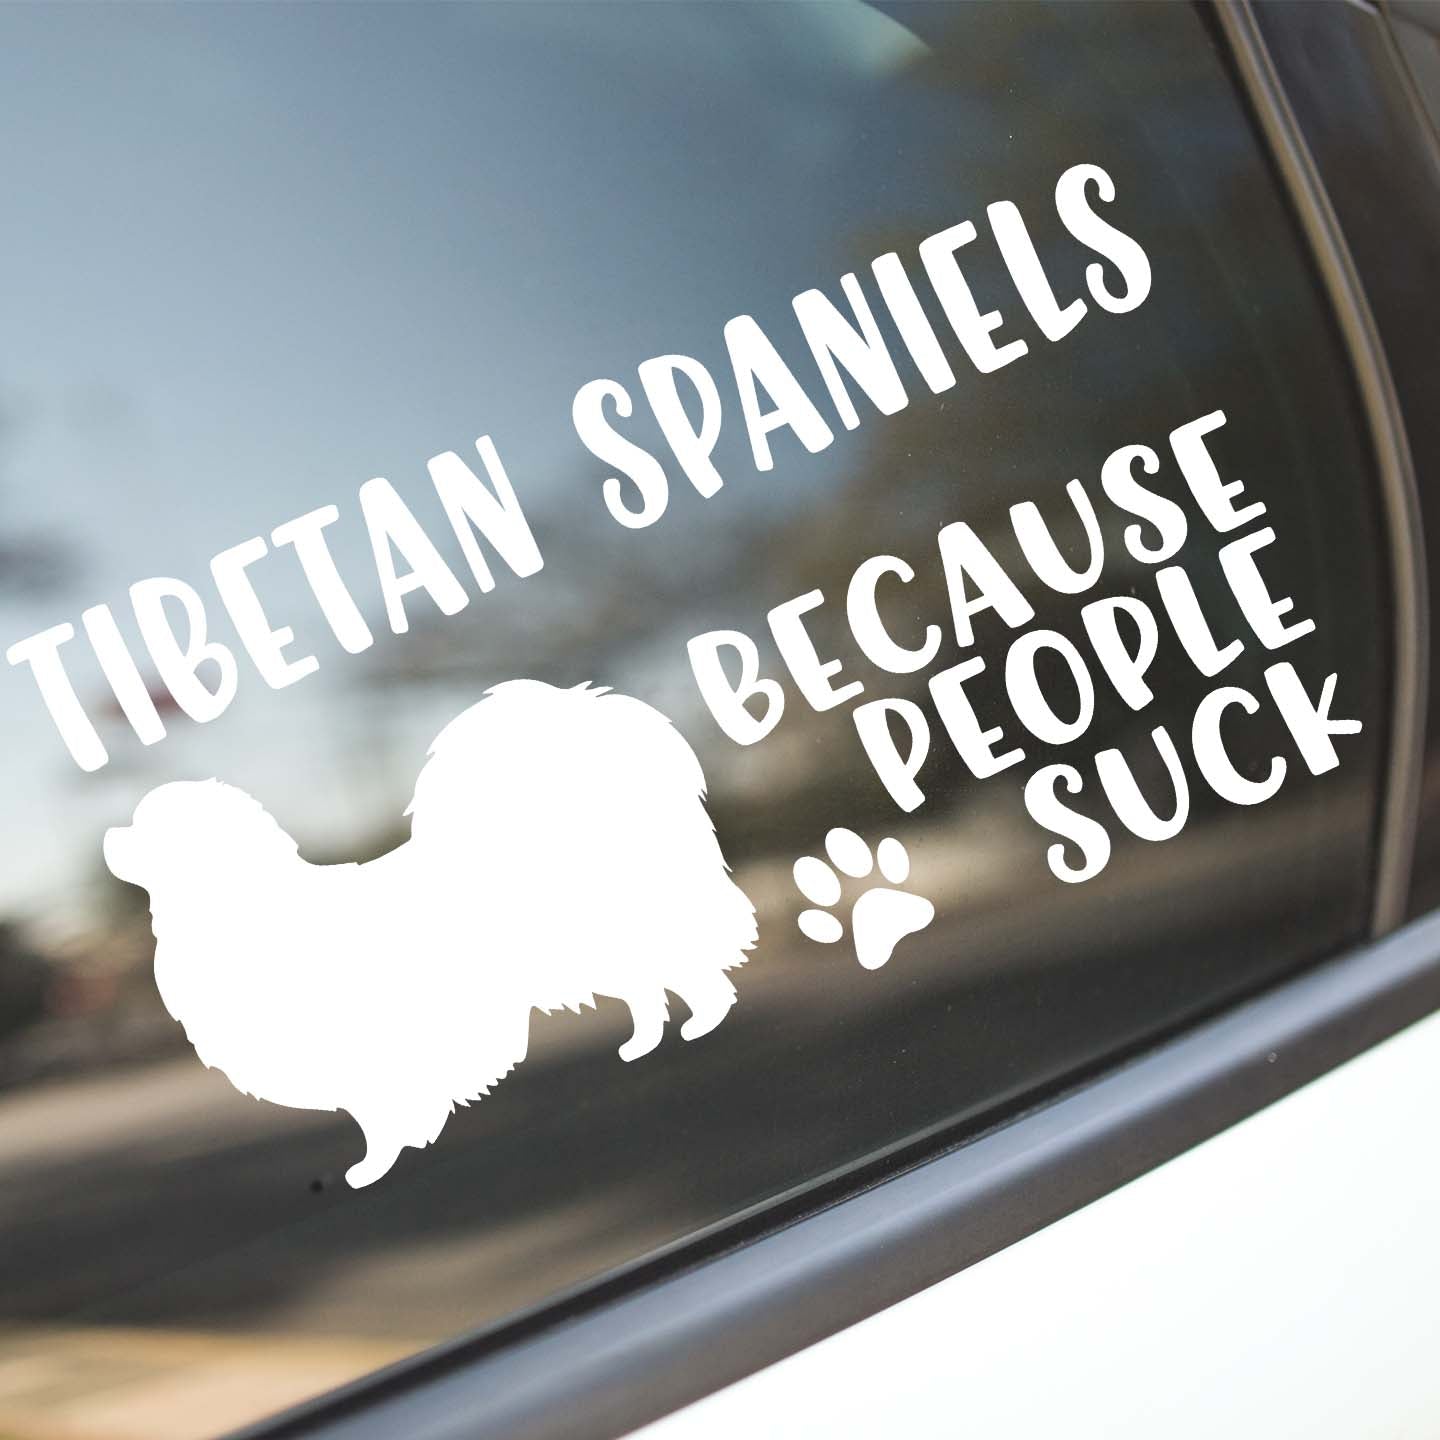 Tibetan Spaniels Because People Suck Sticker